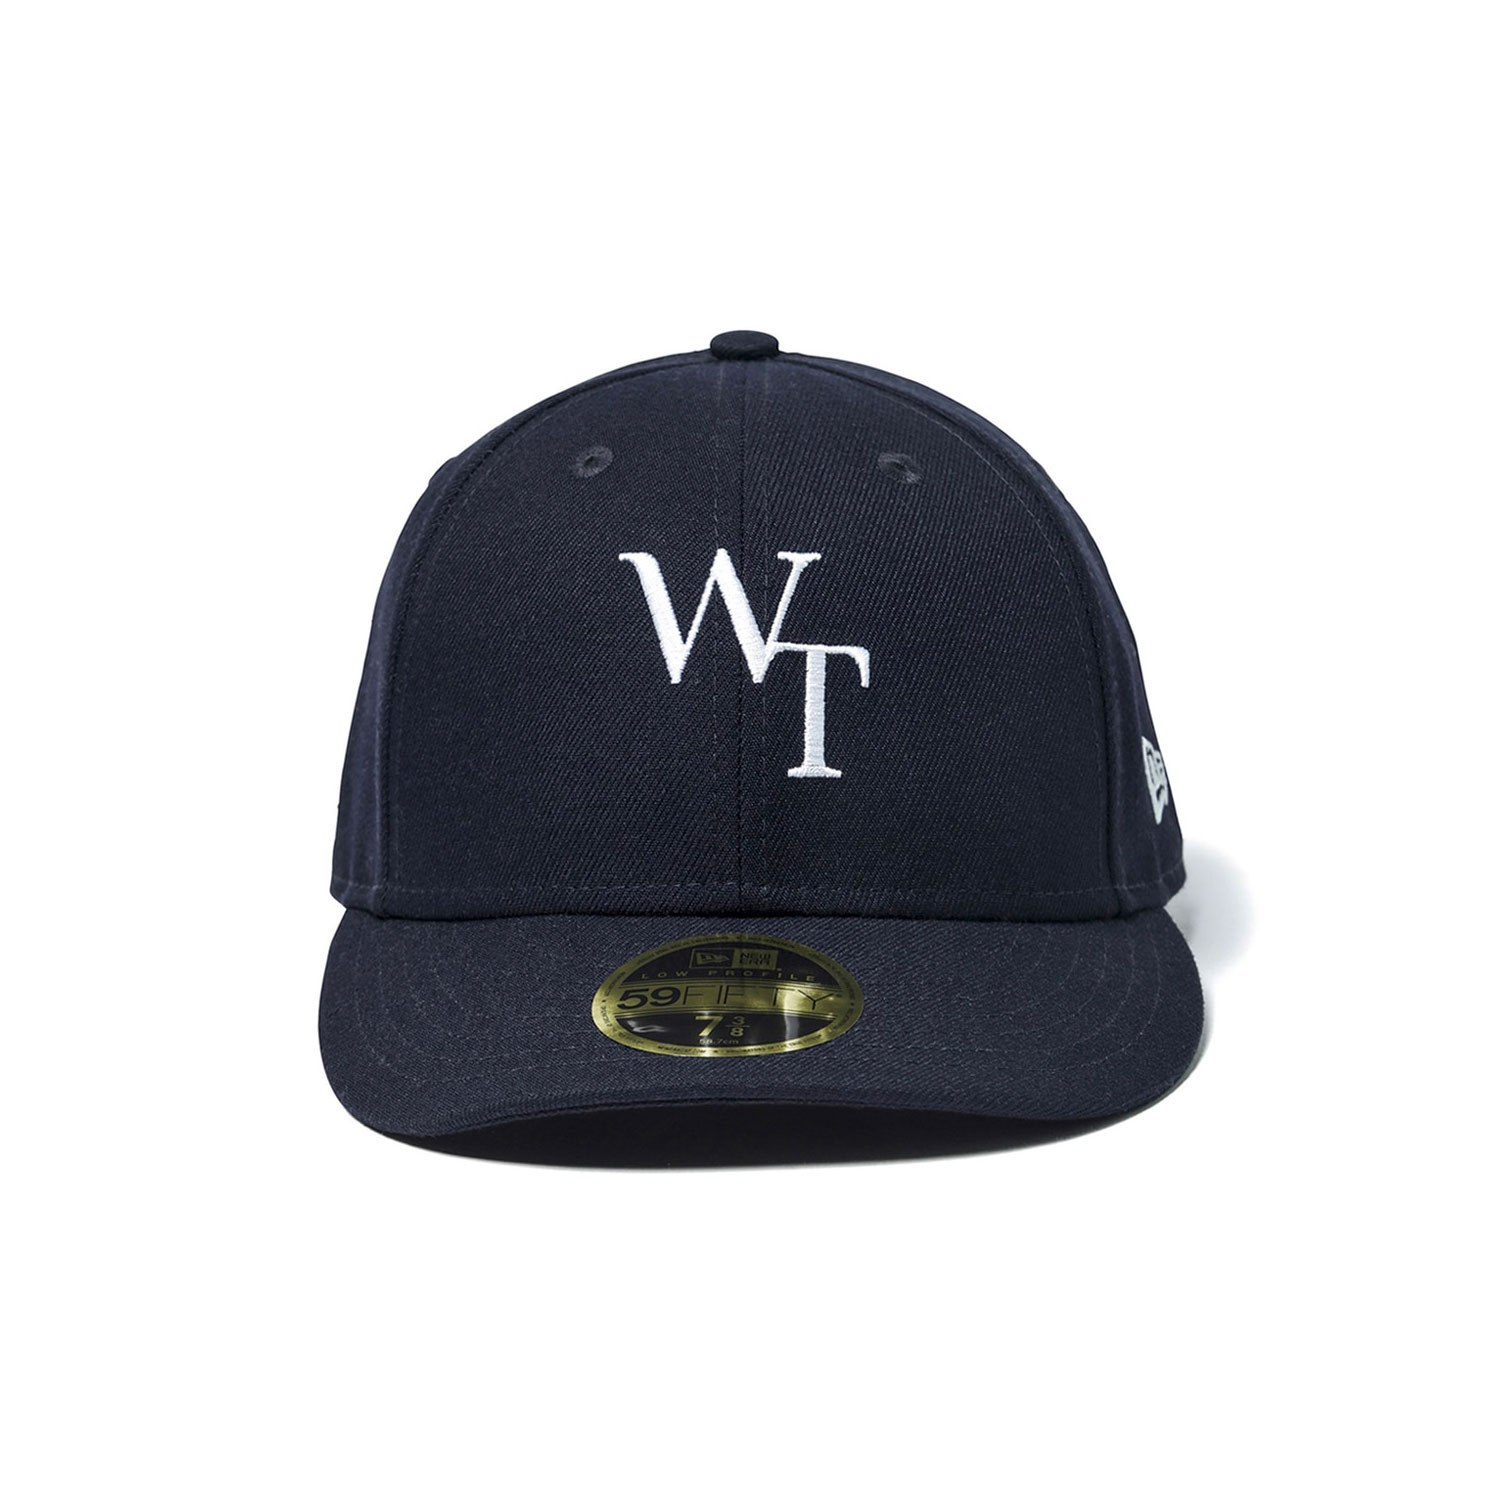 WTAPS newera 59fifty low profile cap